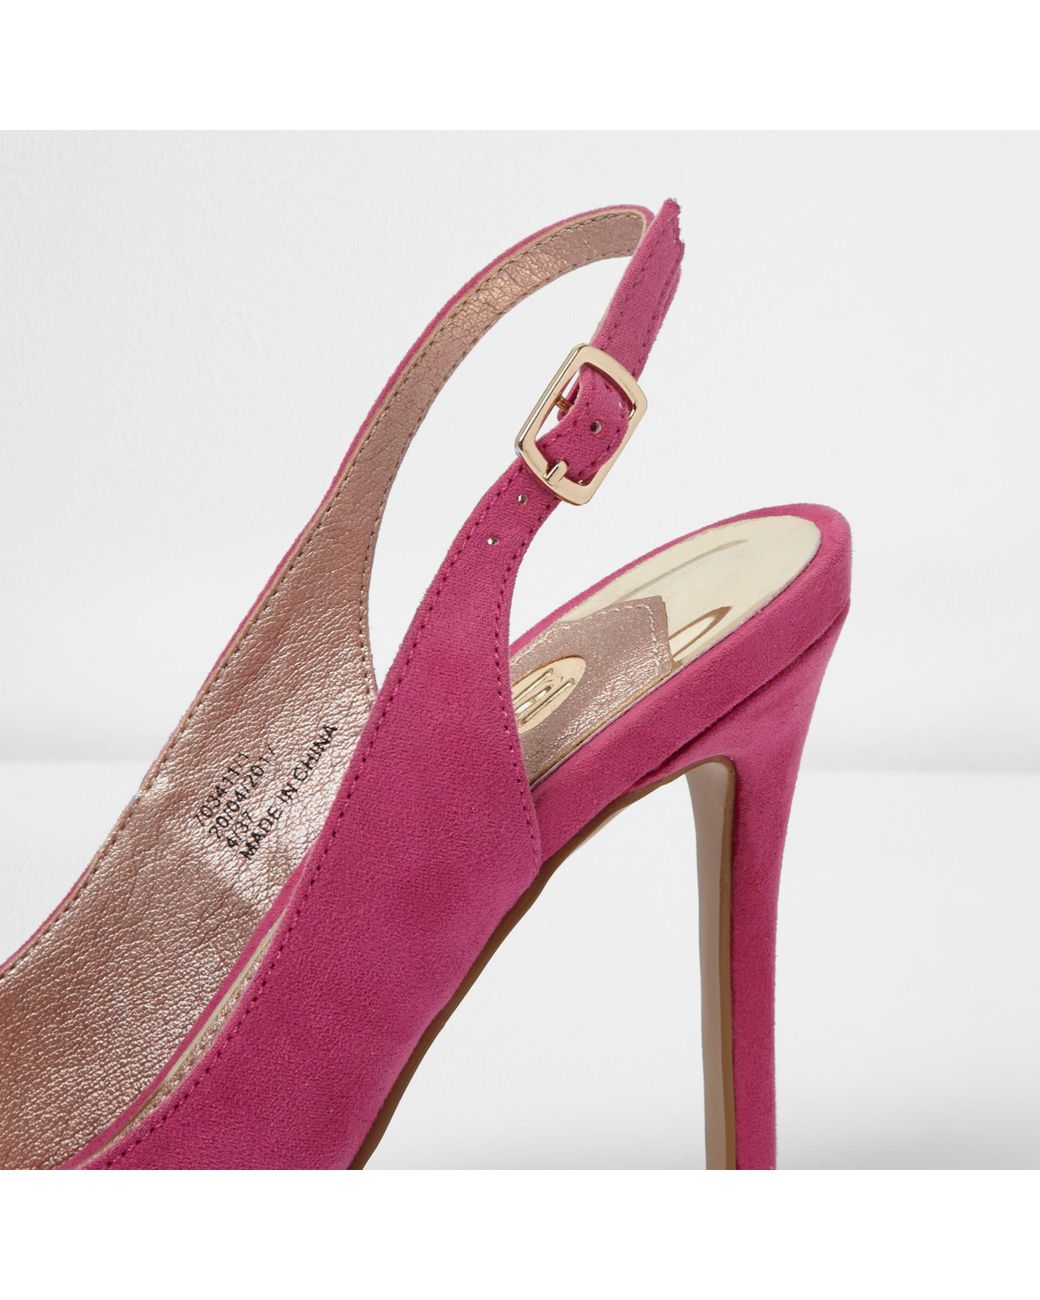 River Island selling £33 slingback heels that look exactly like